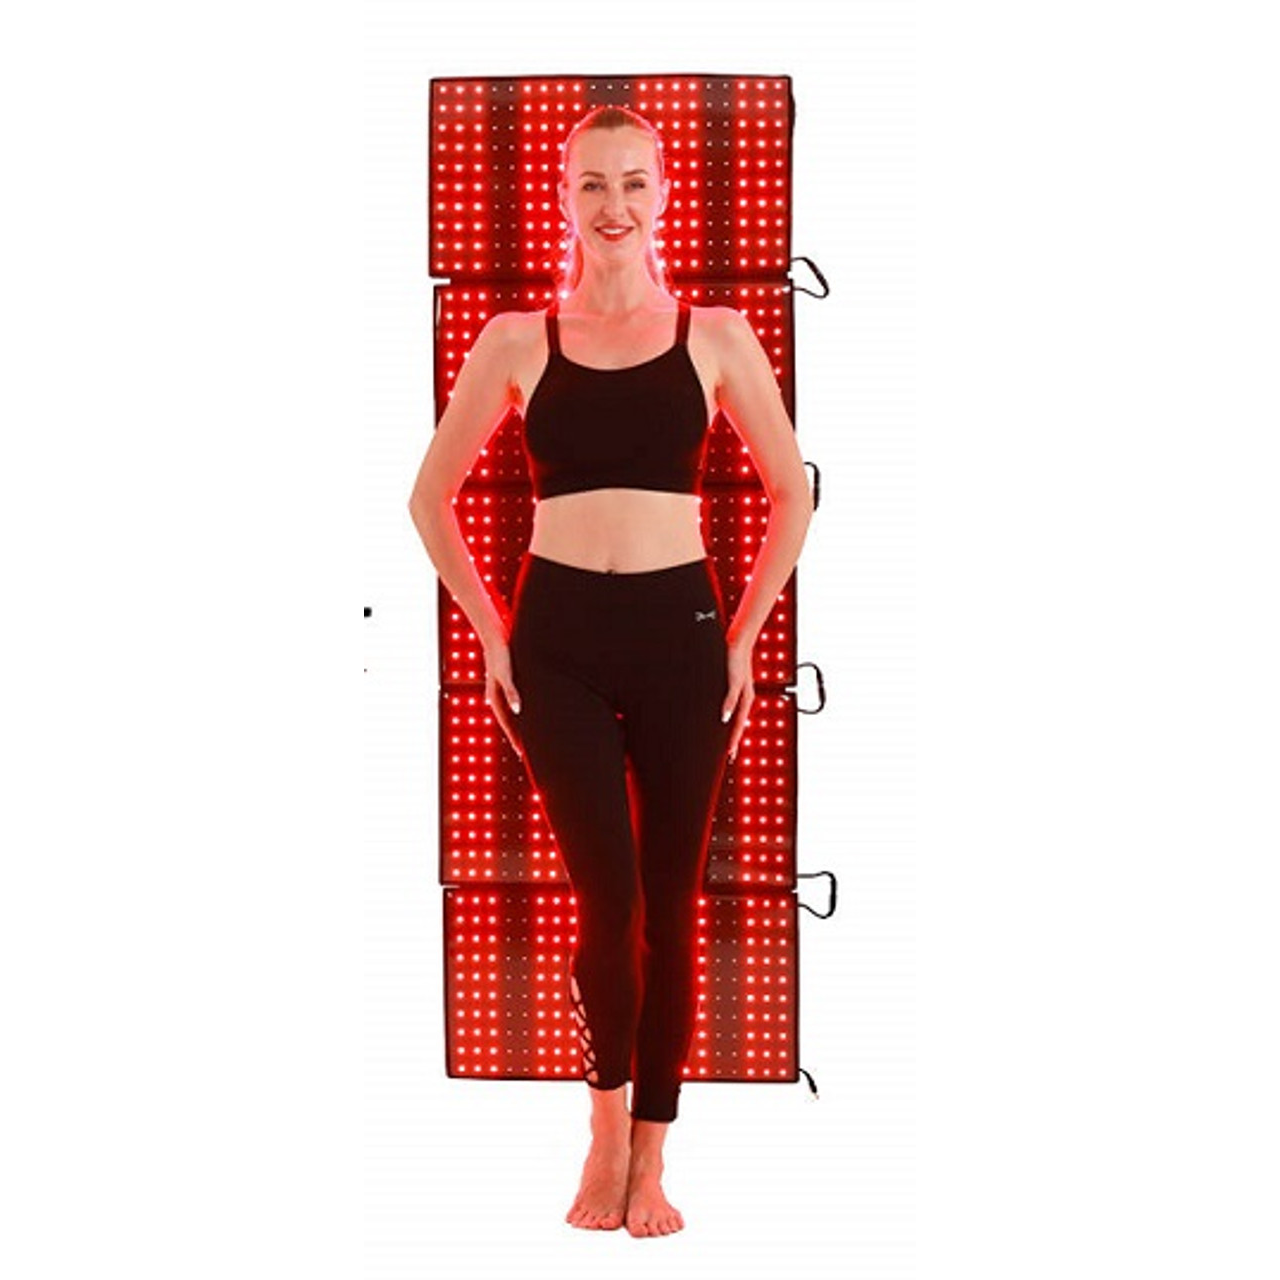 Summer Body Mega Red Light Pad System - 6 Medium Pads, Belly Pad & Arm Bands